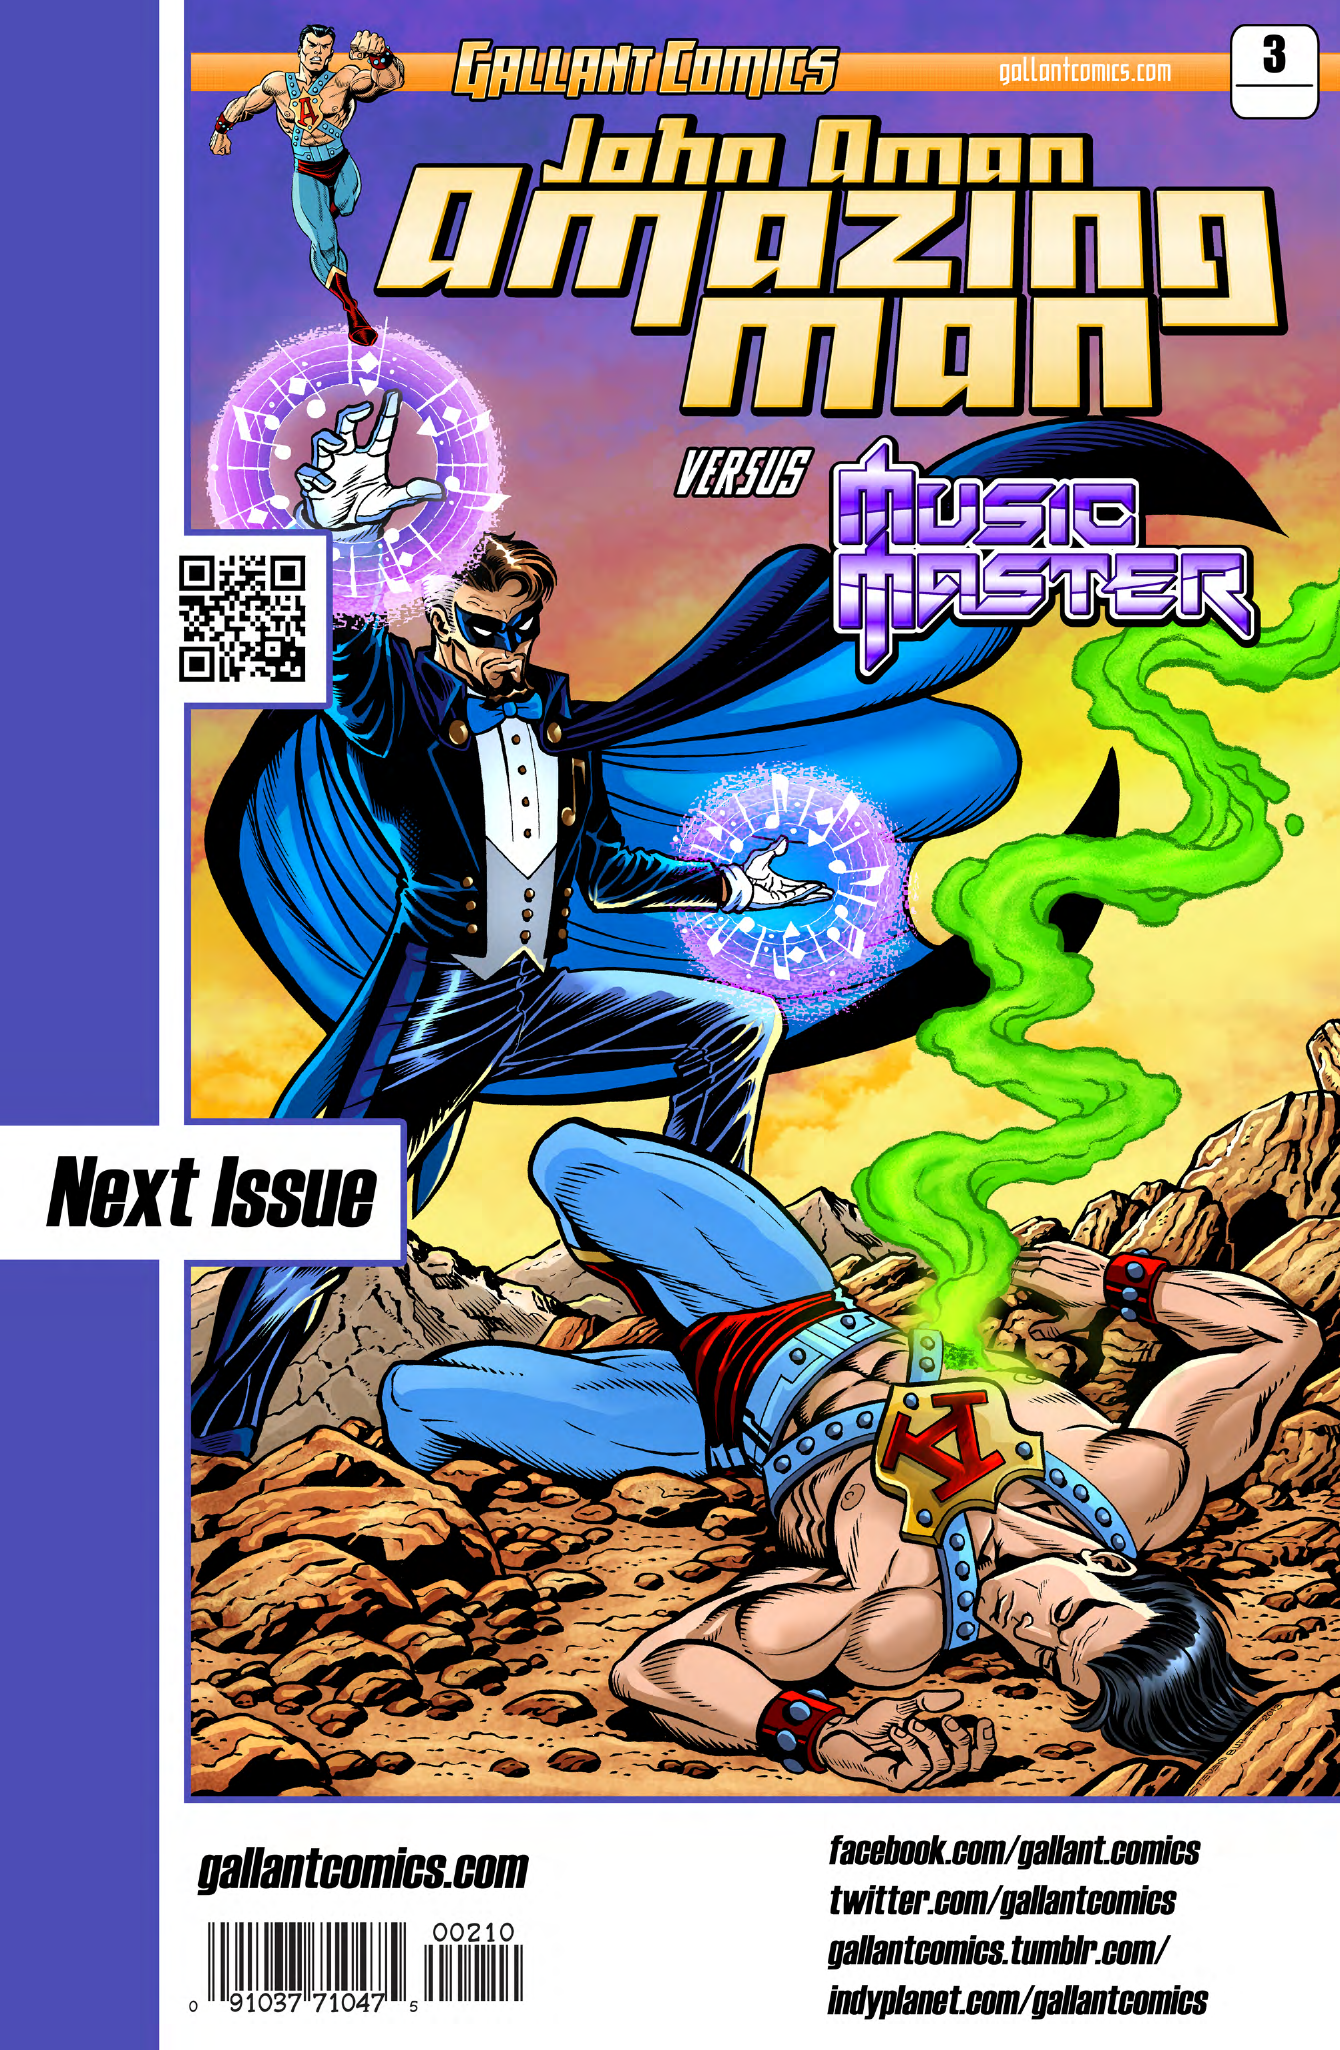 Read online John Aman Amazing Man comic -  Issue #2 - 27